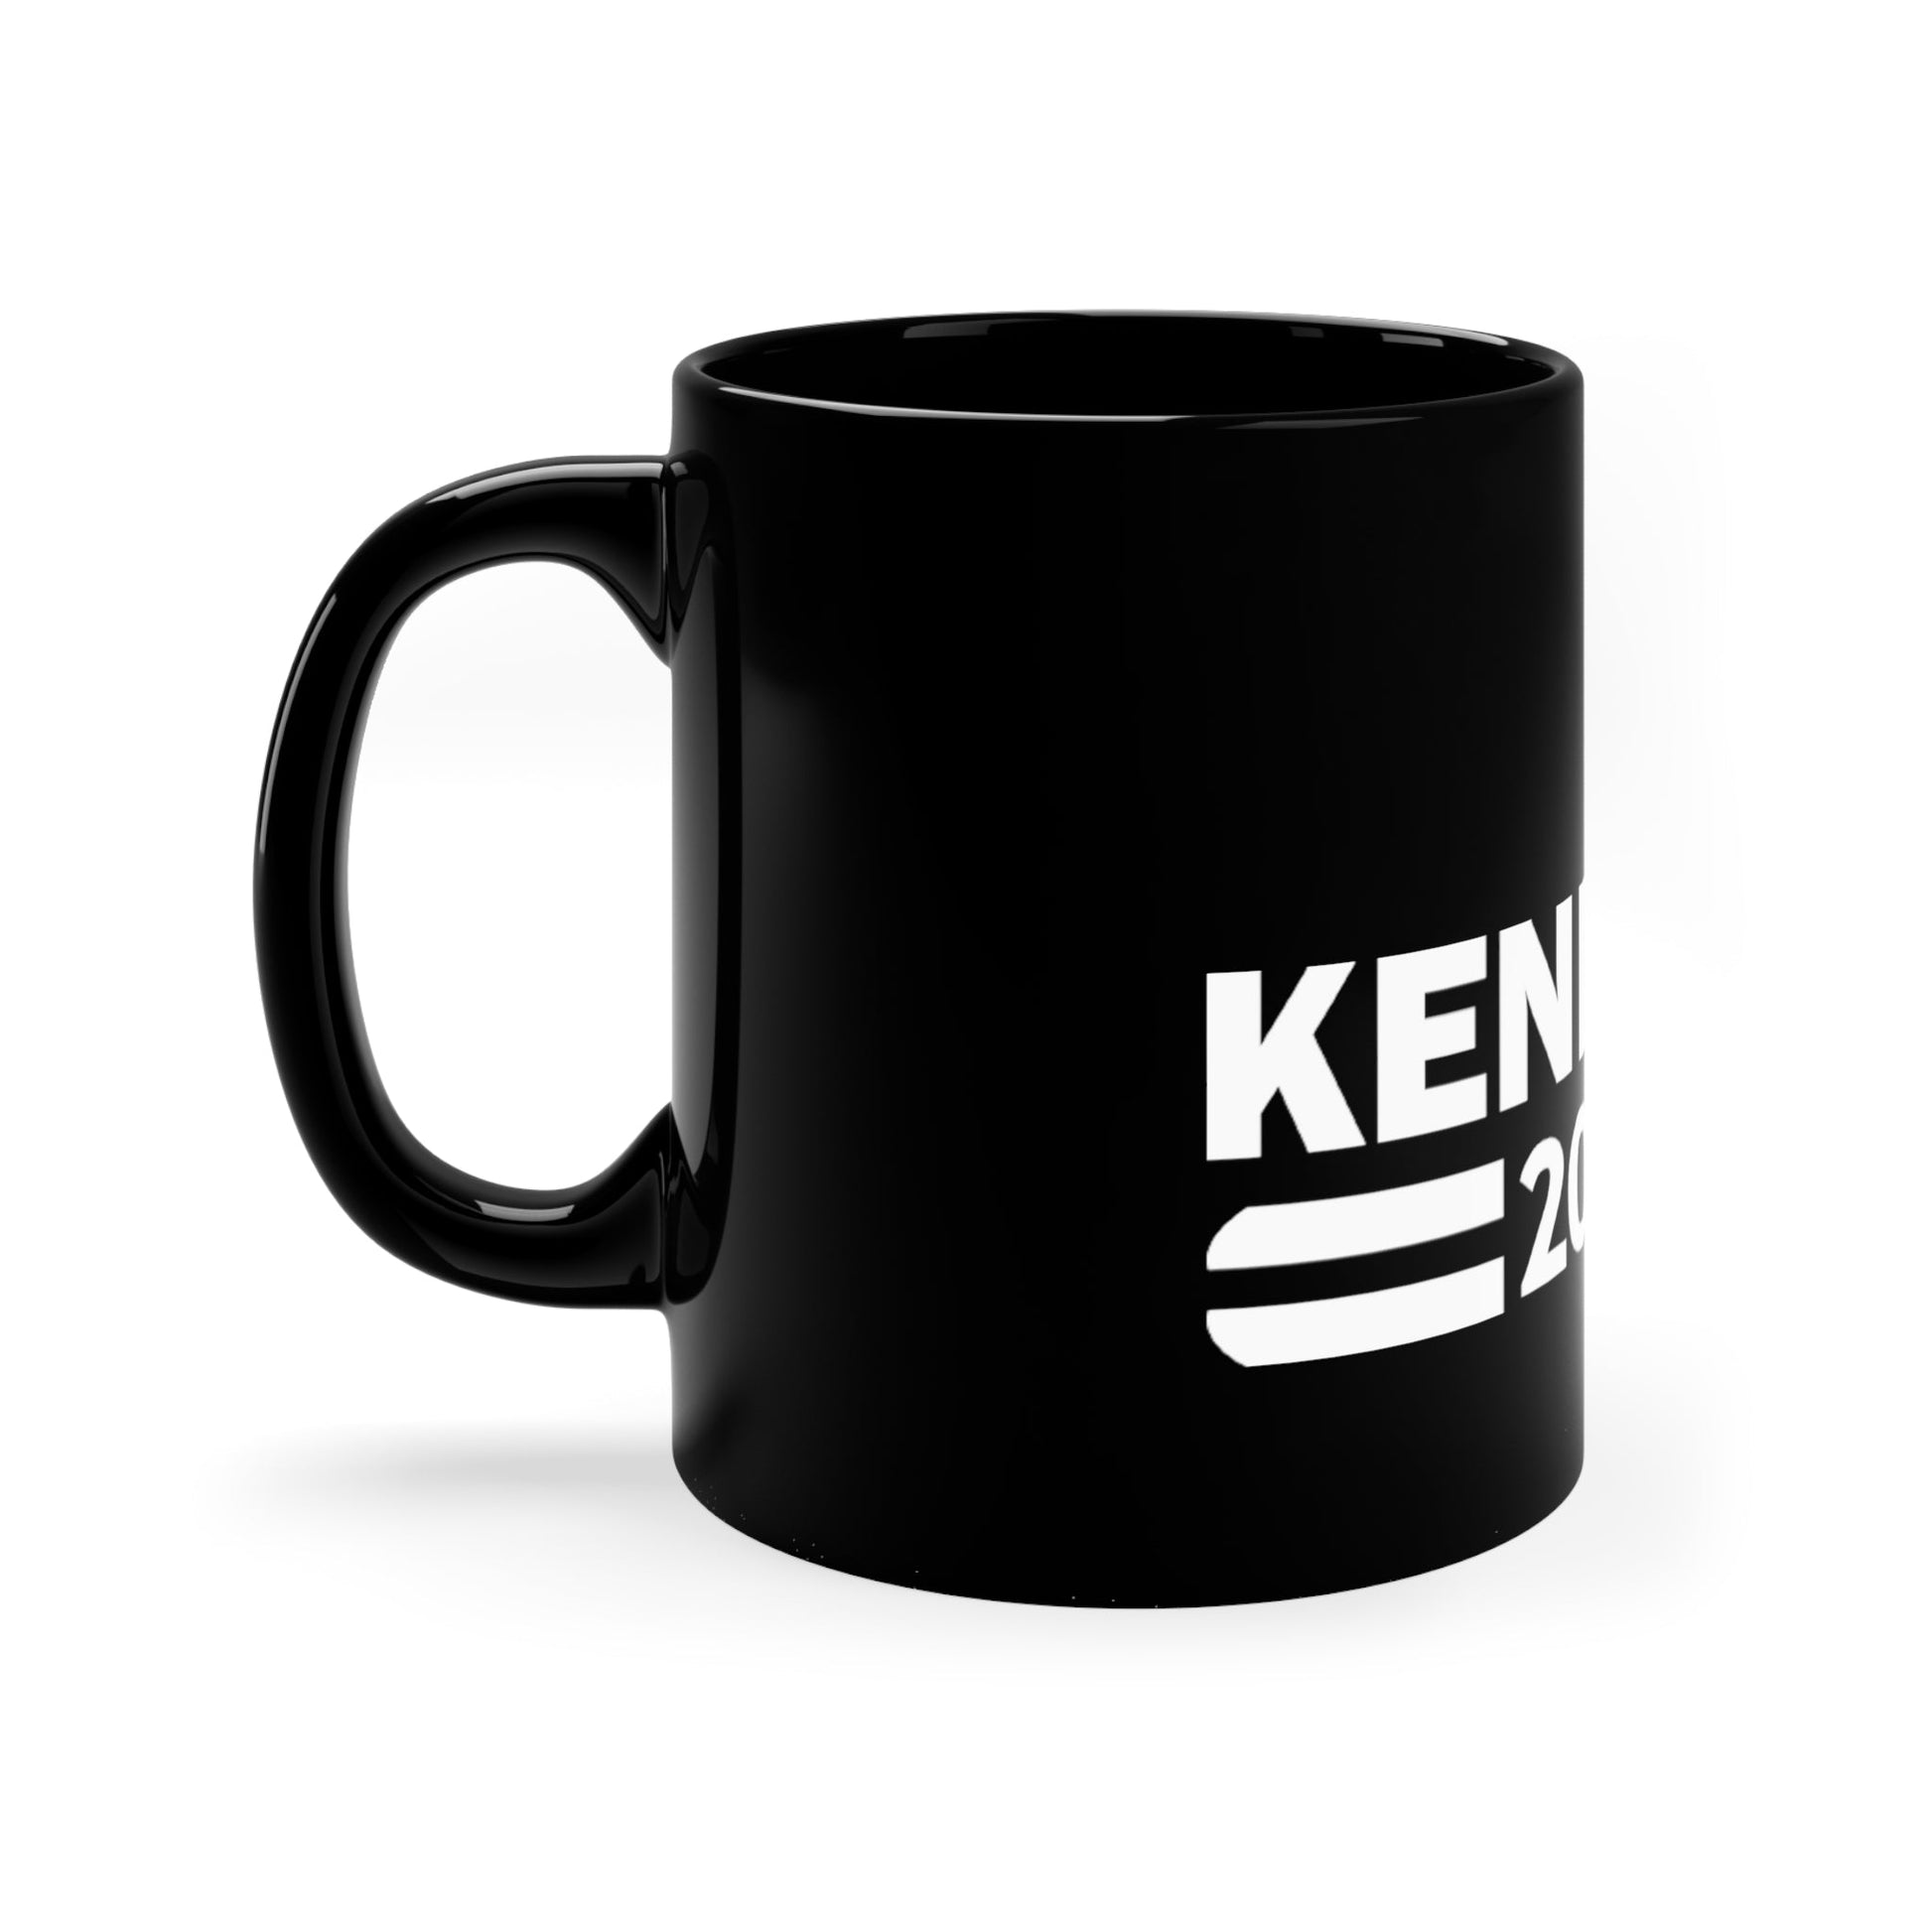 Kennedy Classic Black Mug (11oz) - TEAM KENNEDY. All rights reserved